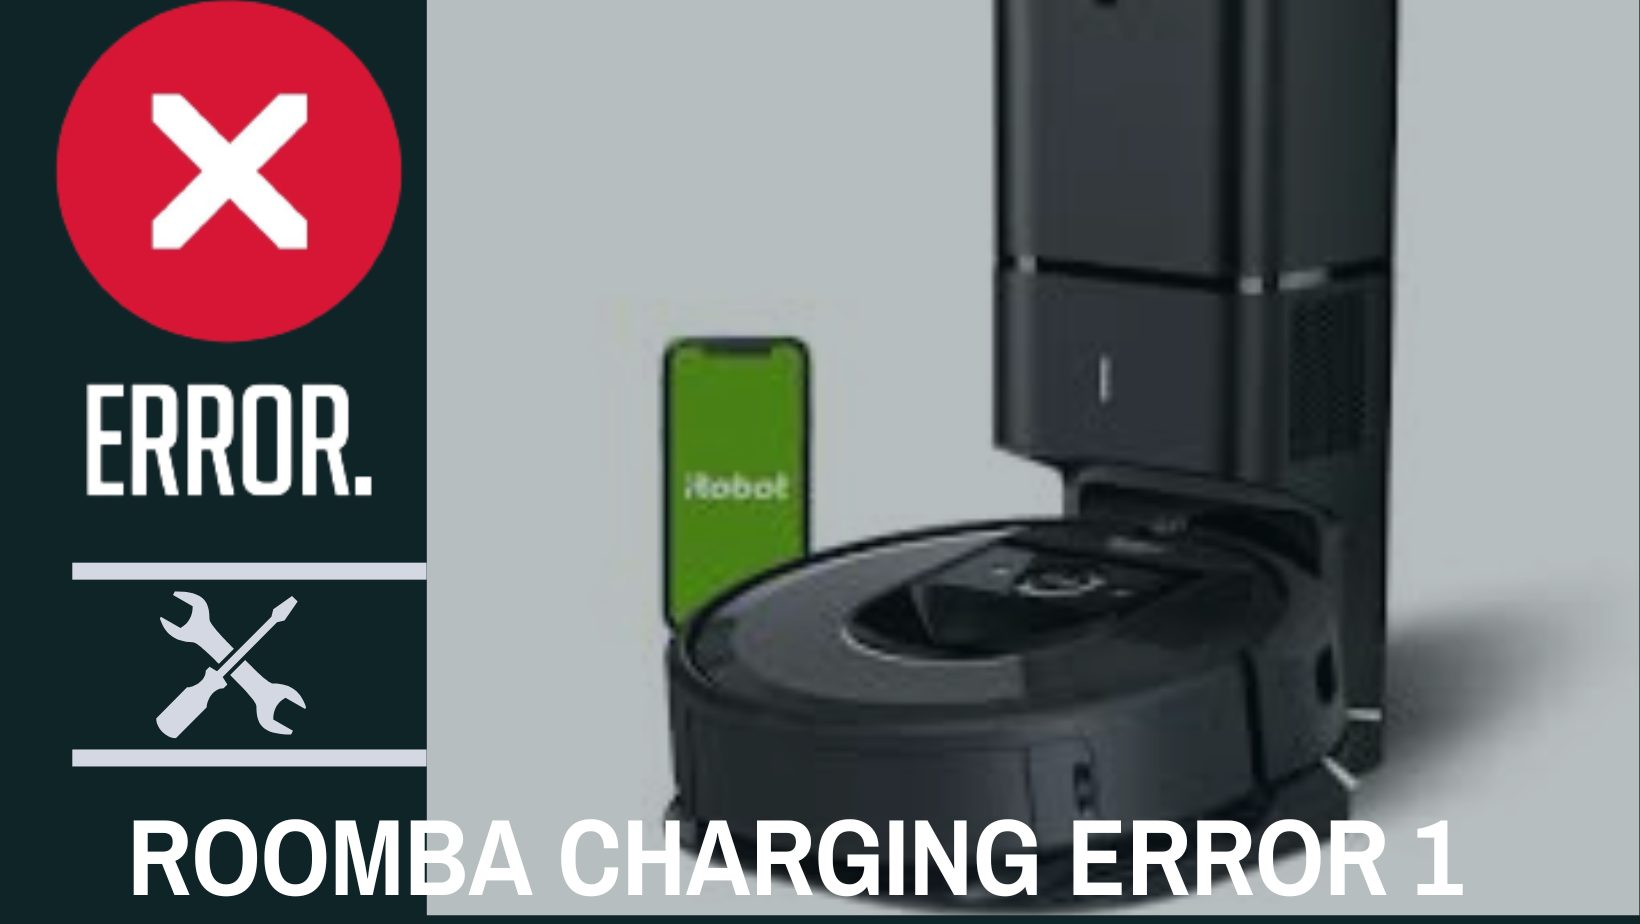 Roomba Charging Error 1